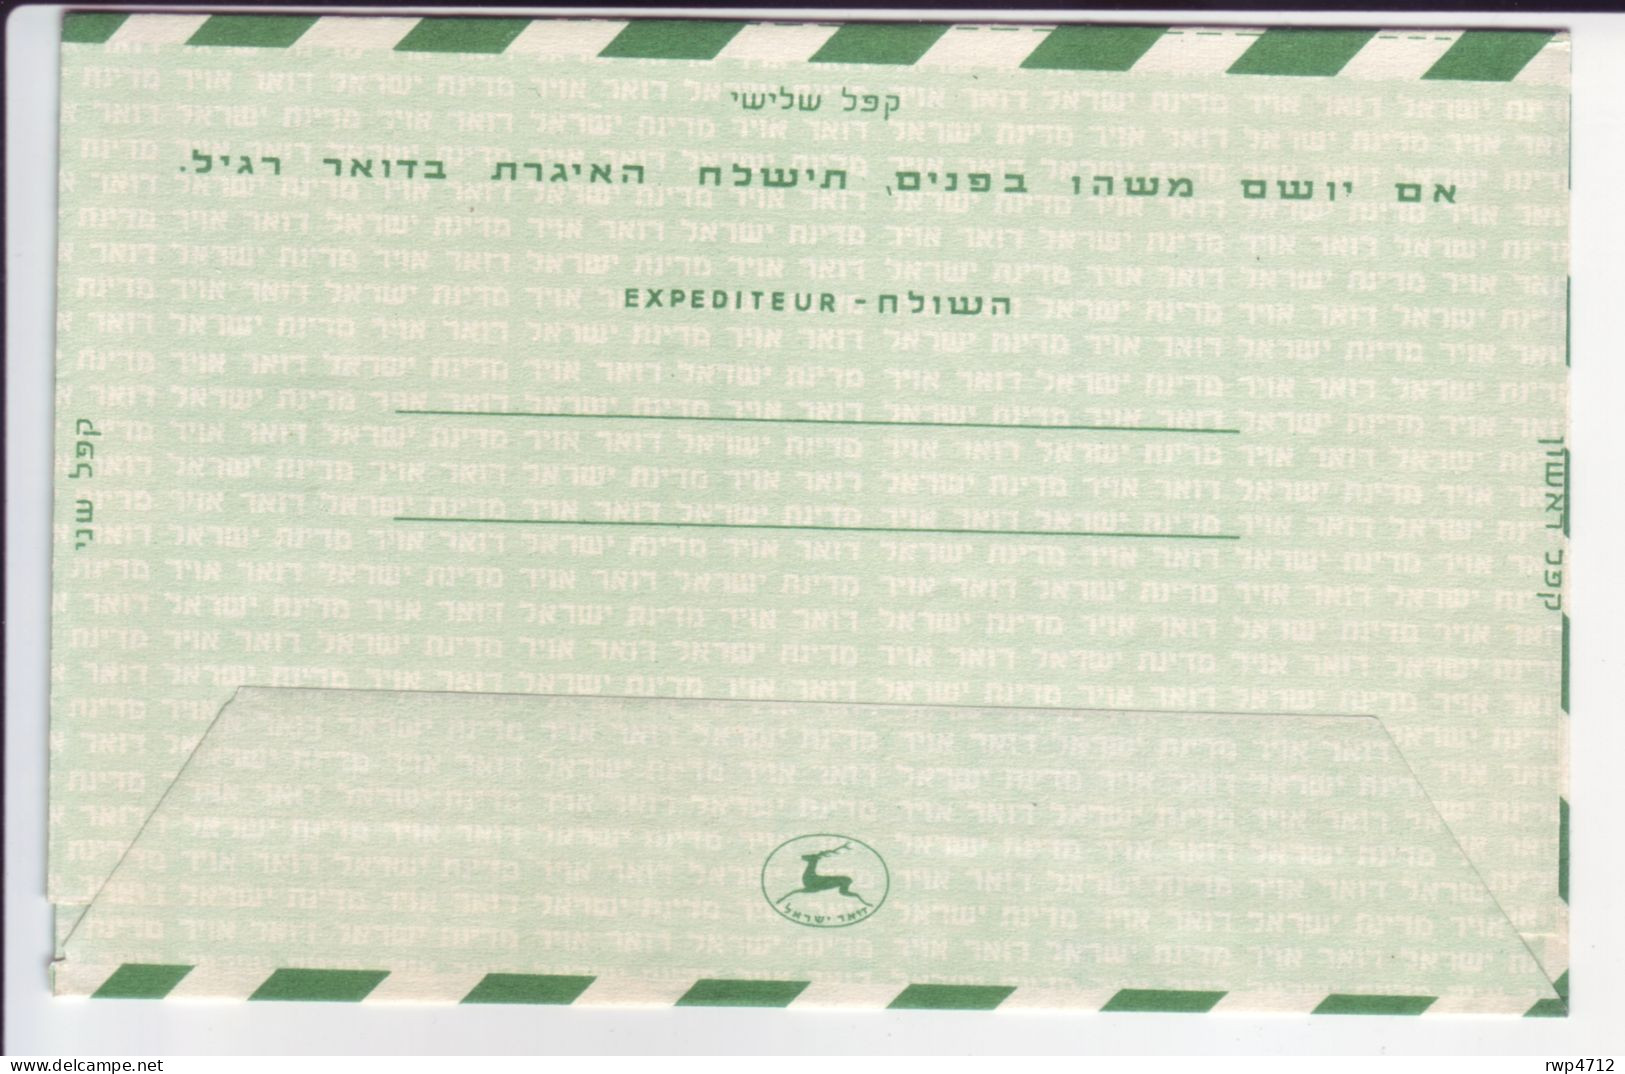 ISRAEL     Aerogramme  250 Pr. - Airmail